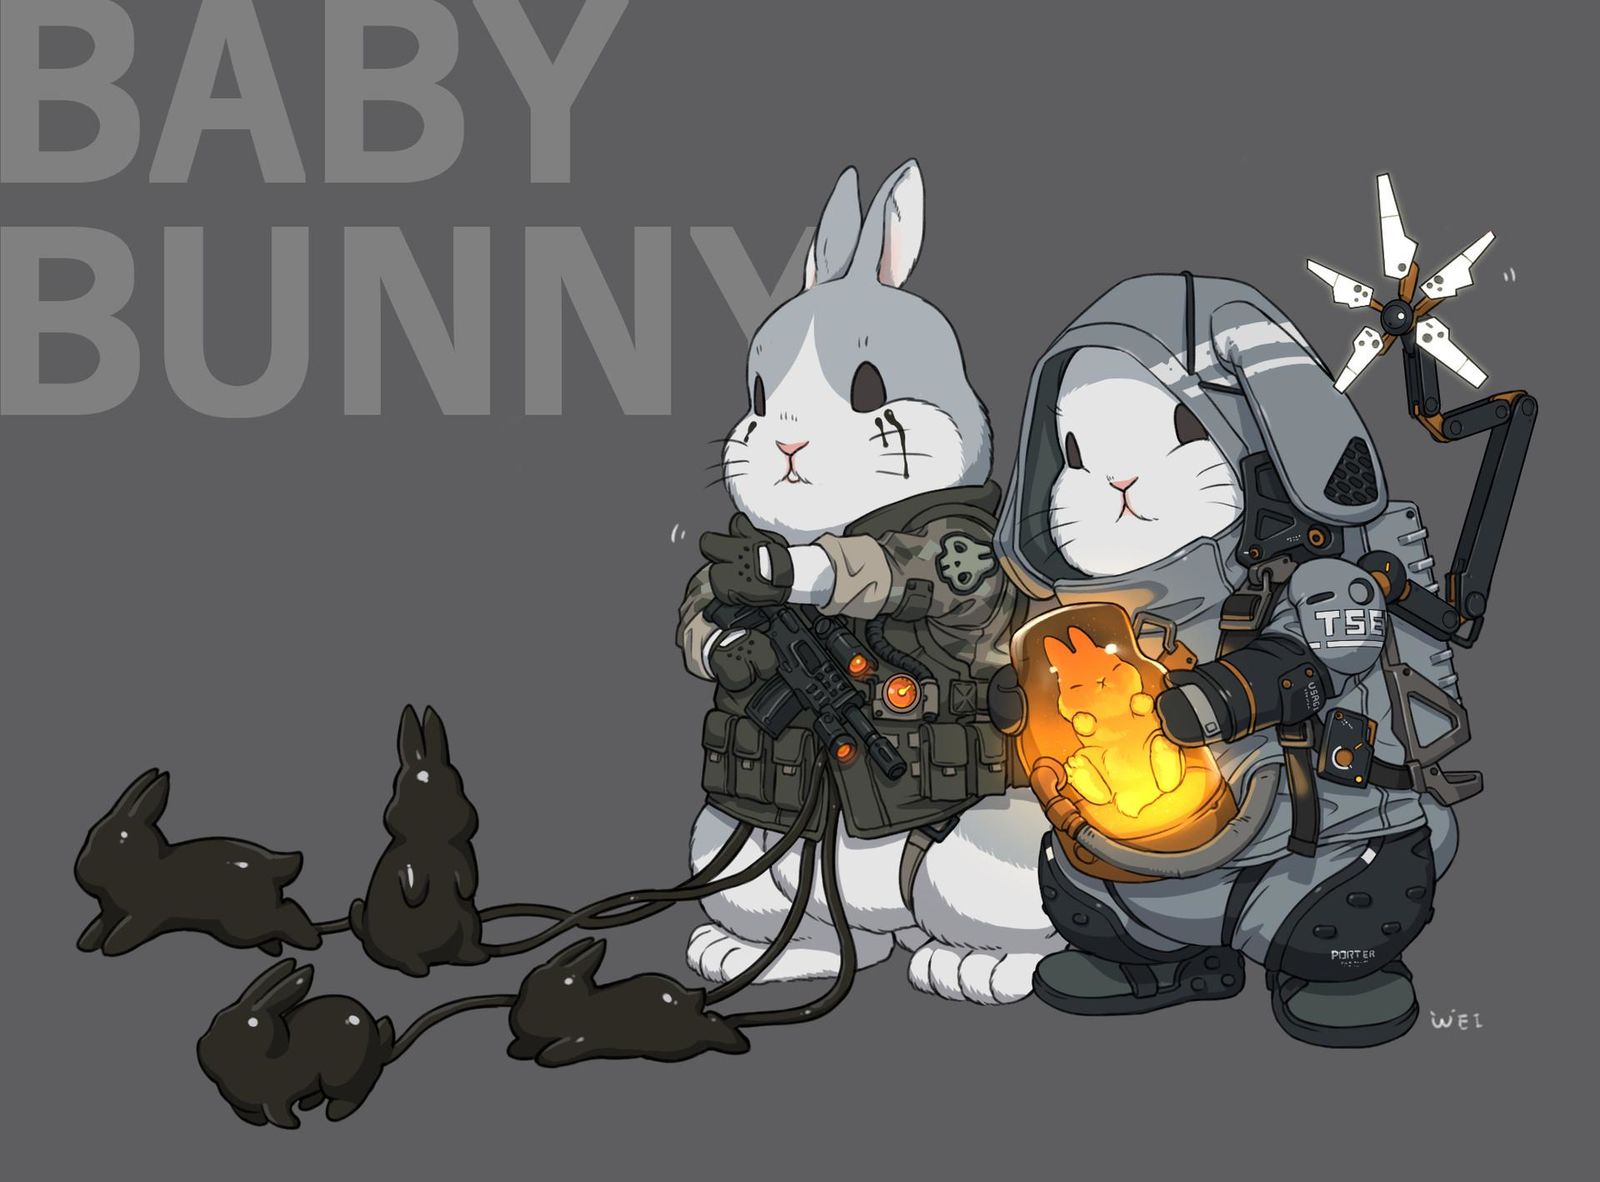 Baby bunny插画图片壁纸